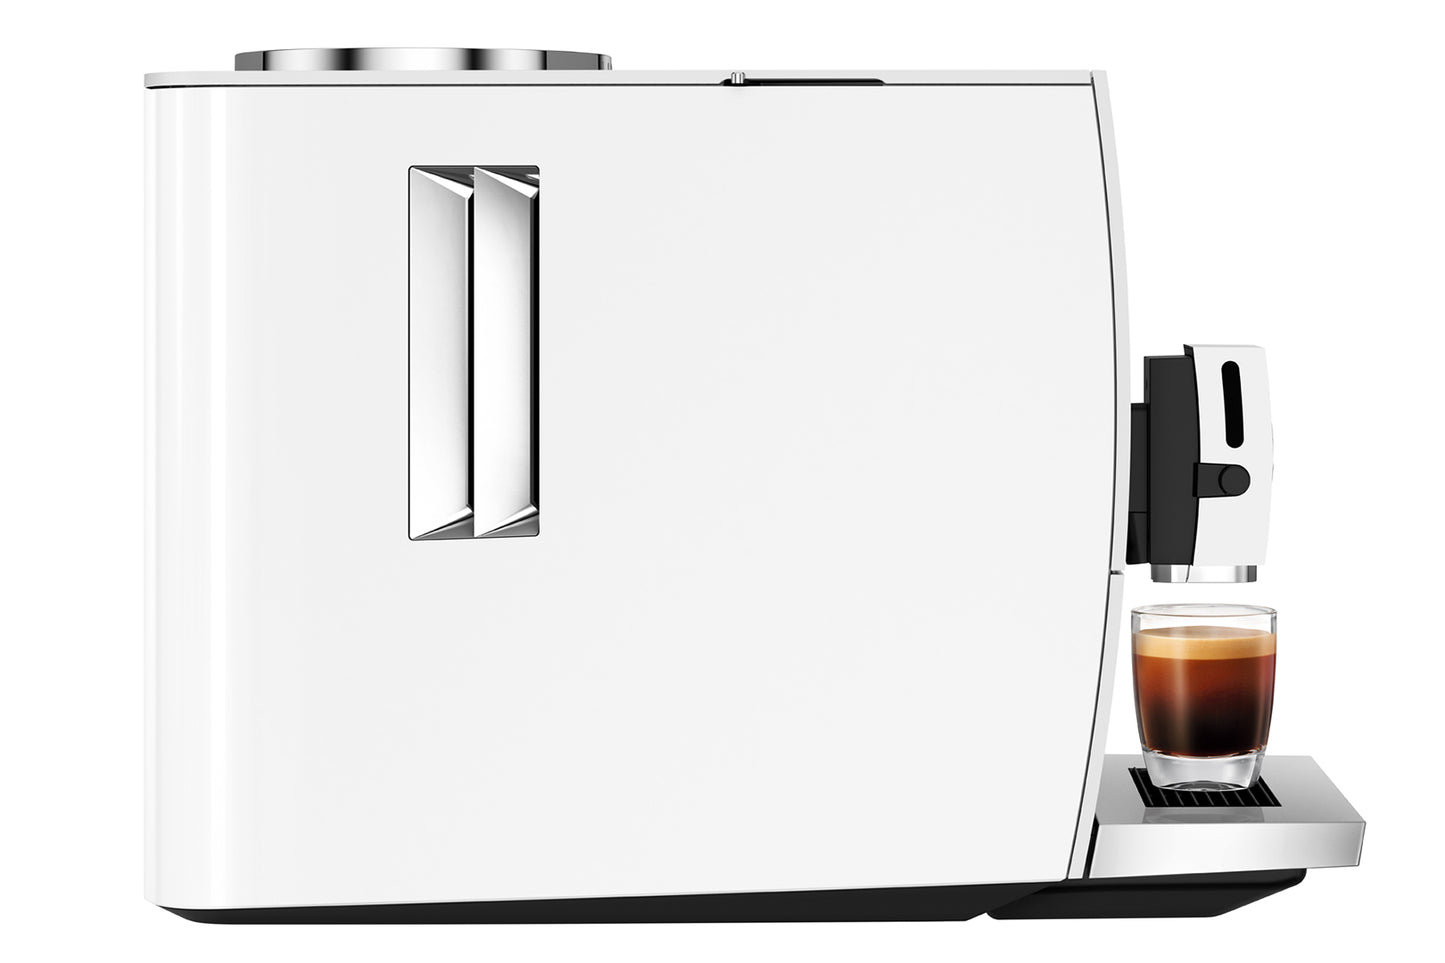 ENA 8 Full Nordic White-Kaffeevollautomaten-Jura-Beutelschmidt